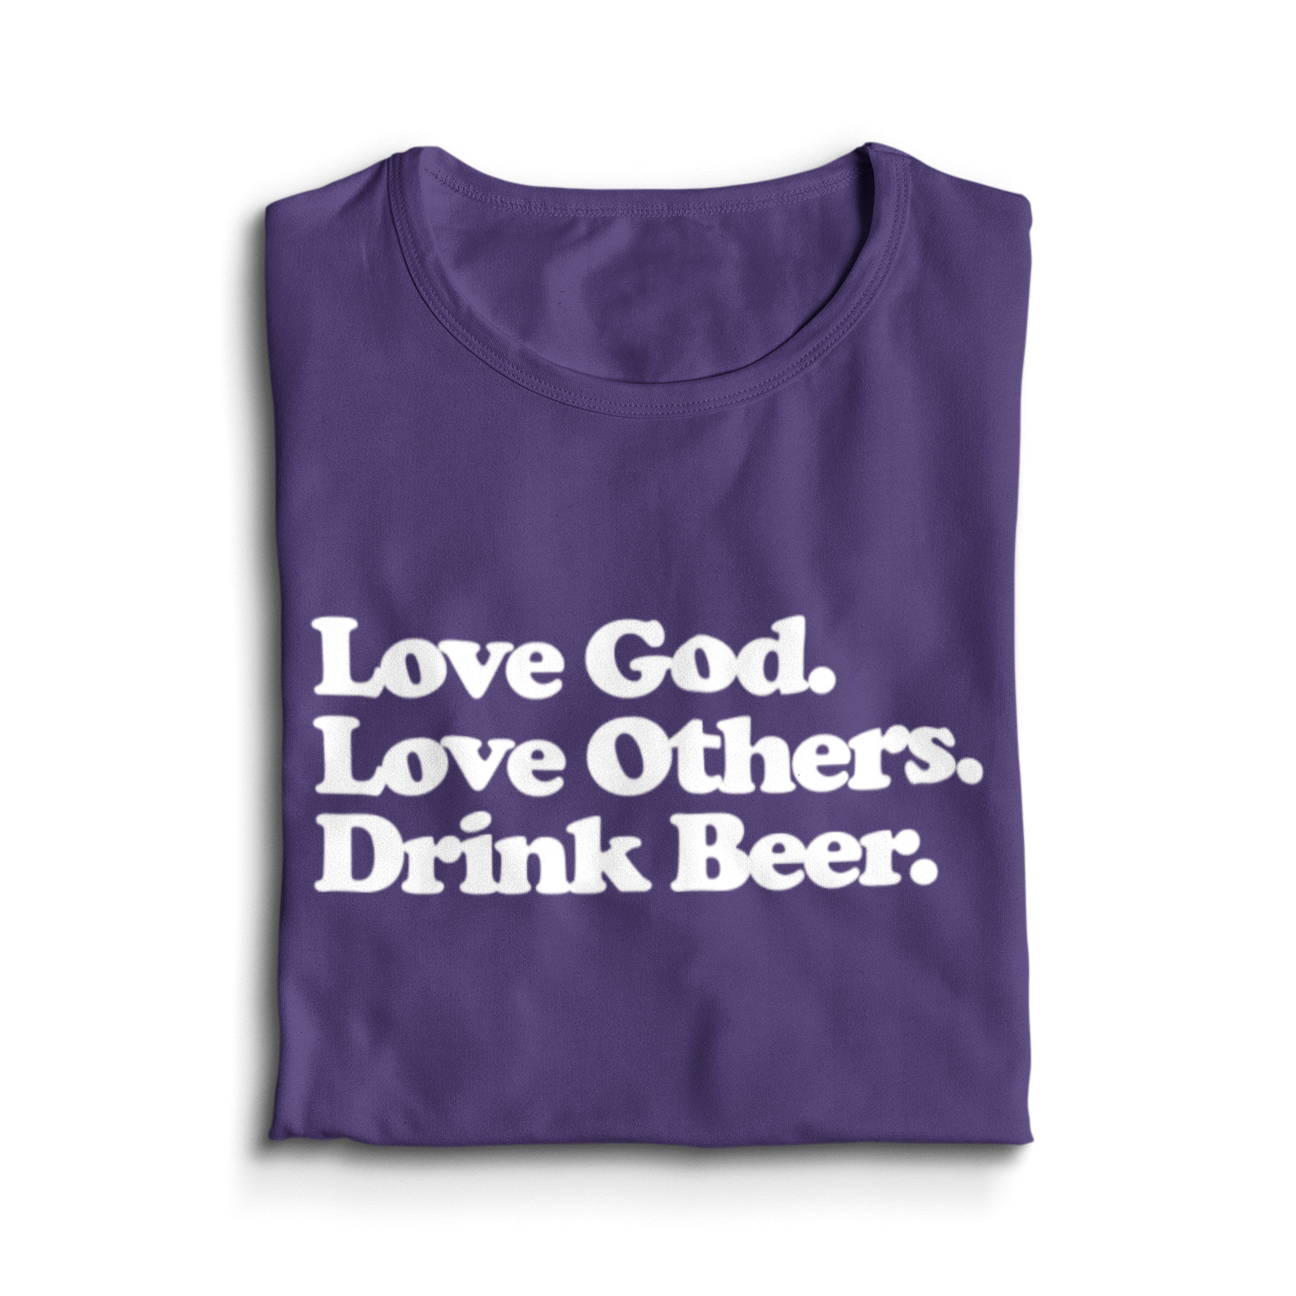 Drink Beer T-shirt